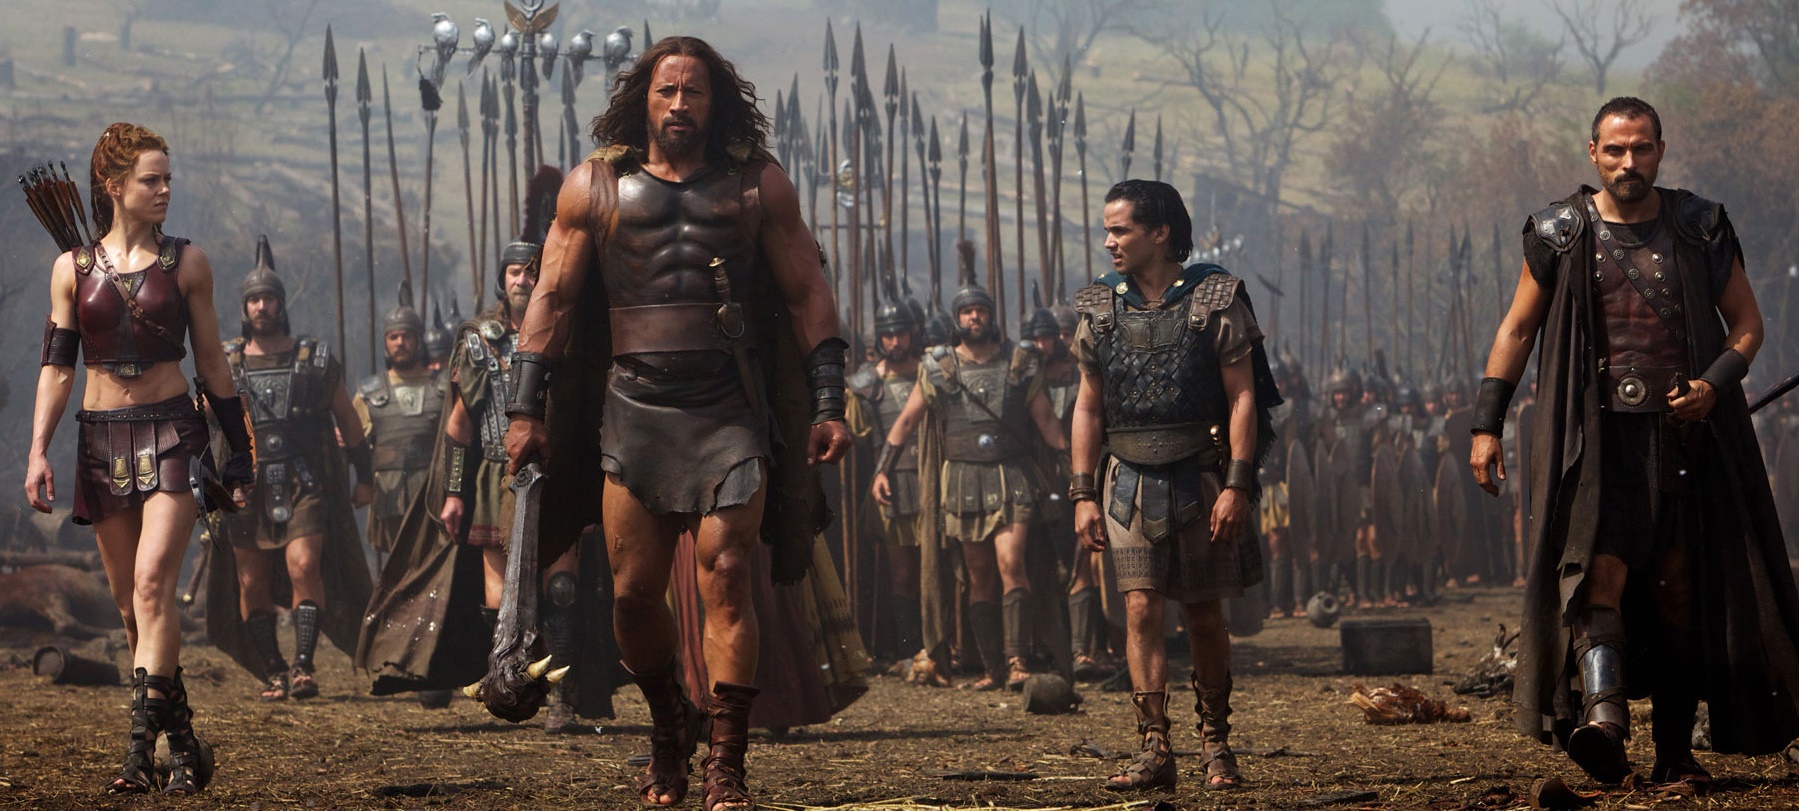 Film Review: 'Hercules', Starring Dwayne 'The Rock' Johnson